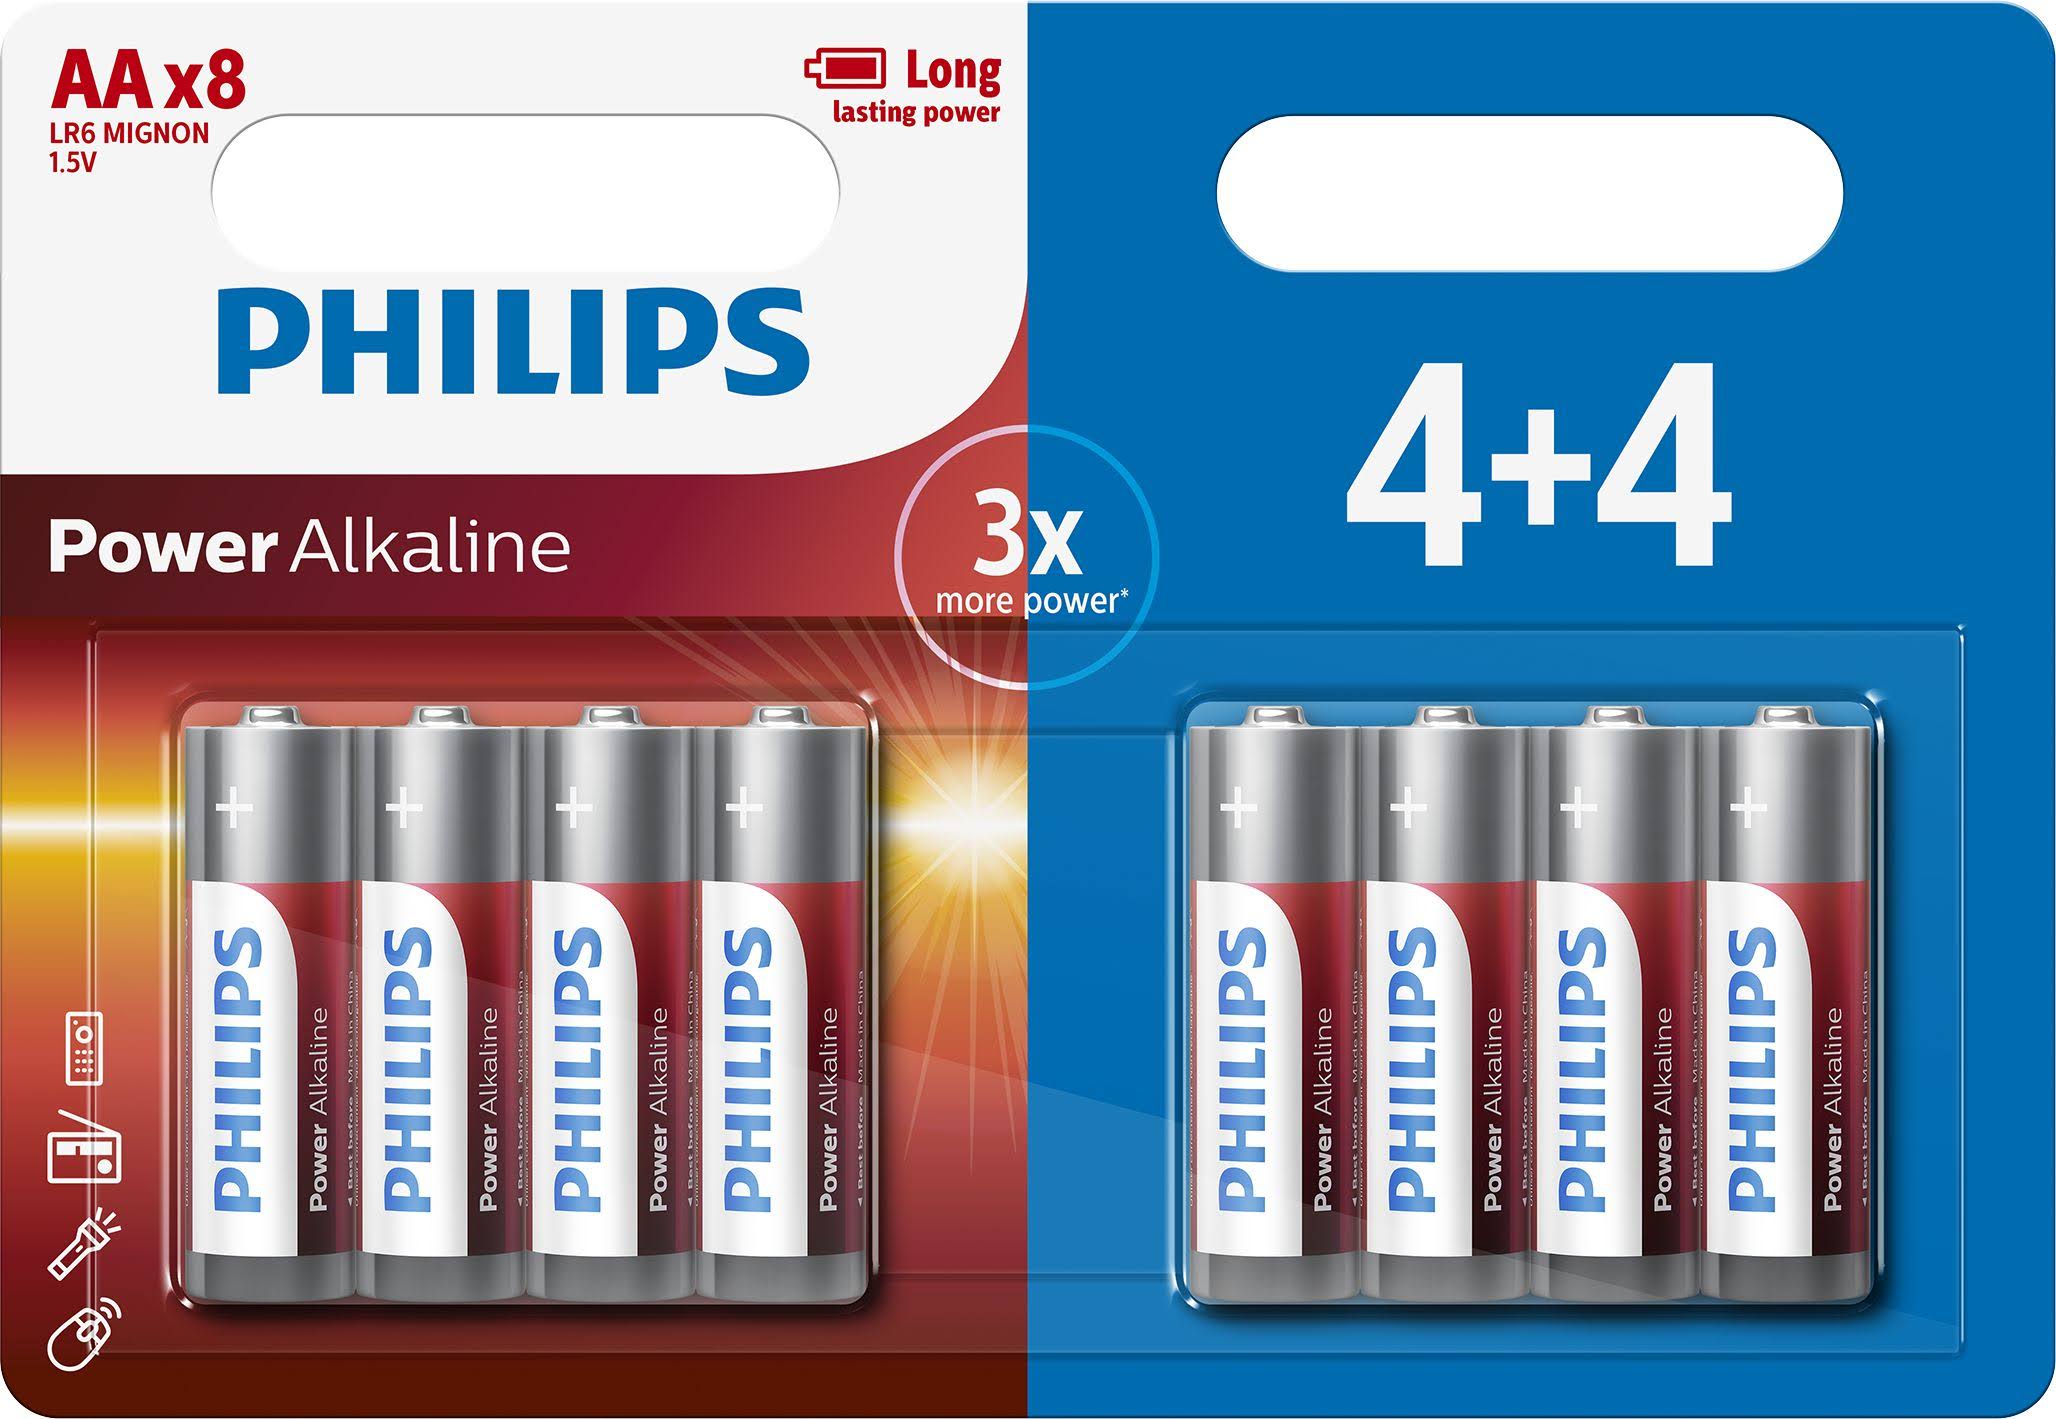 Phillips Ultra Alkaline AA LR6 Batteries 8 Pack - Multi